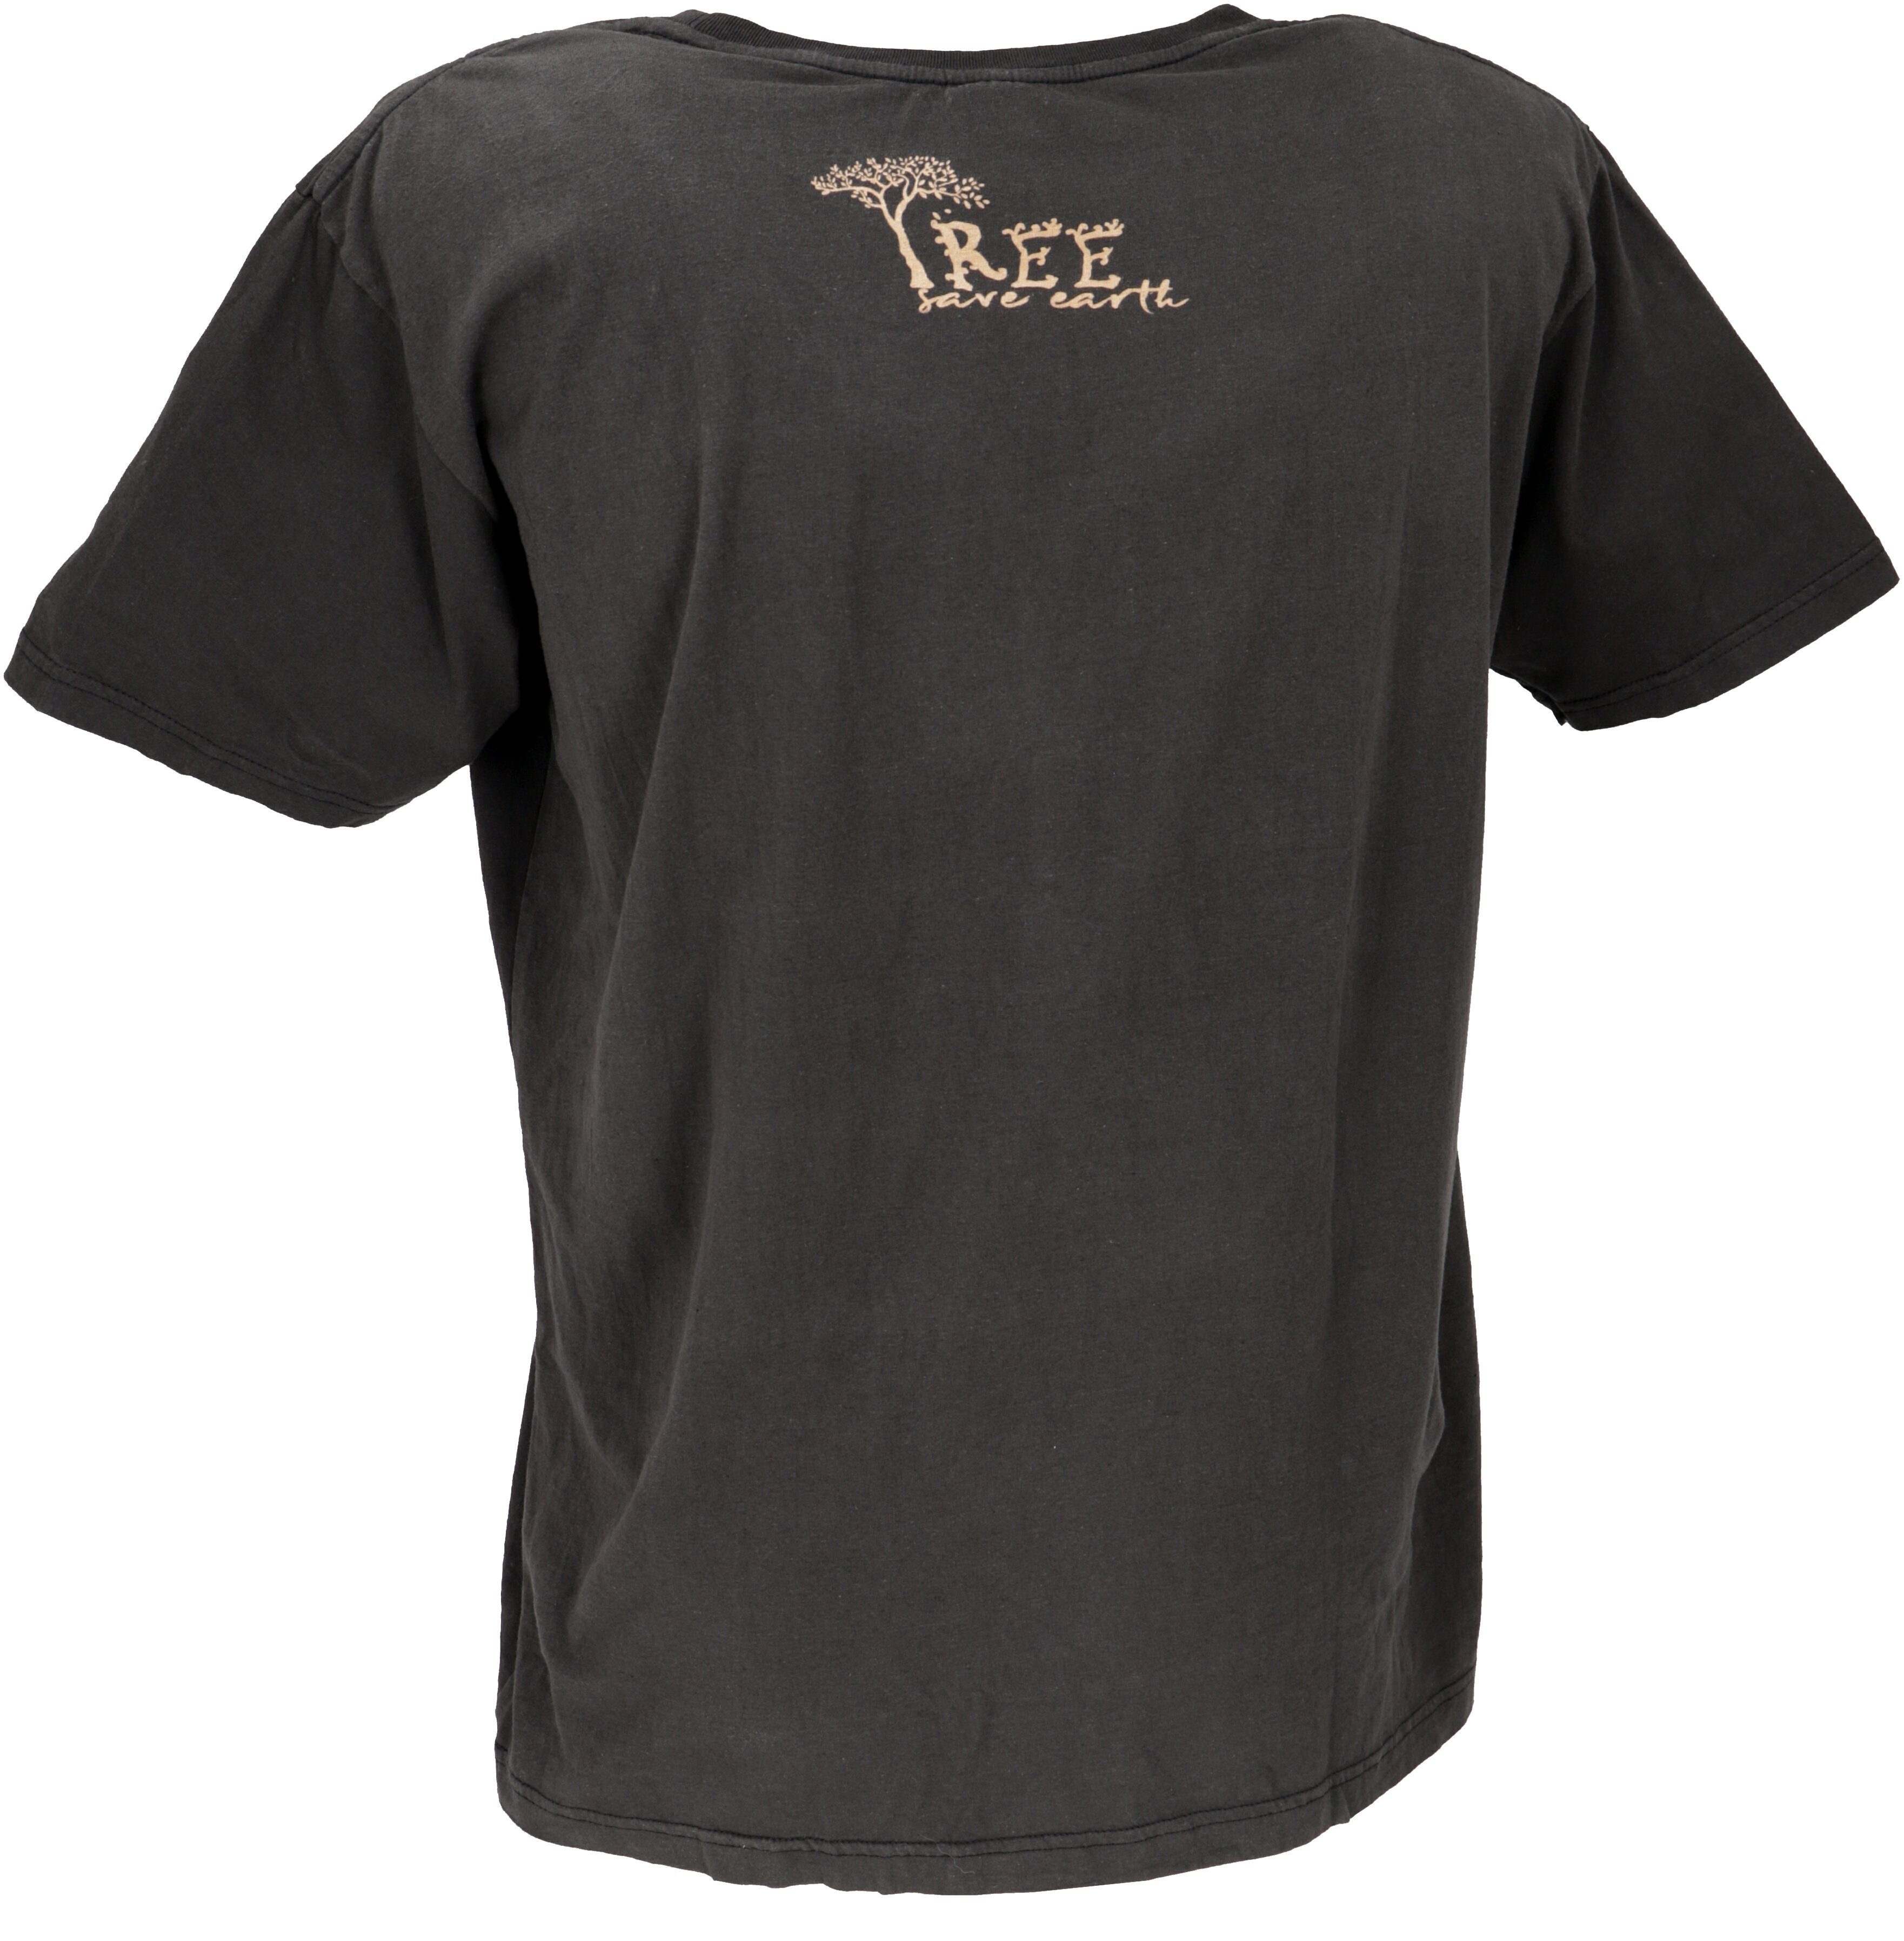 Retro T-Shirt Guru-Shop -.. earth Retro Tree Tree/schwarz T-Shirt T-Shirt, save